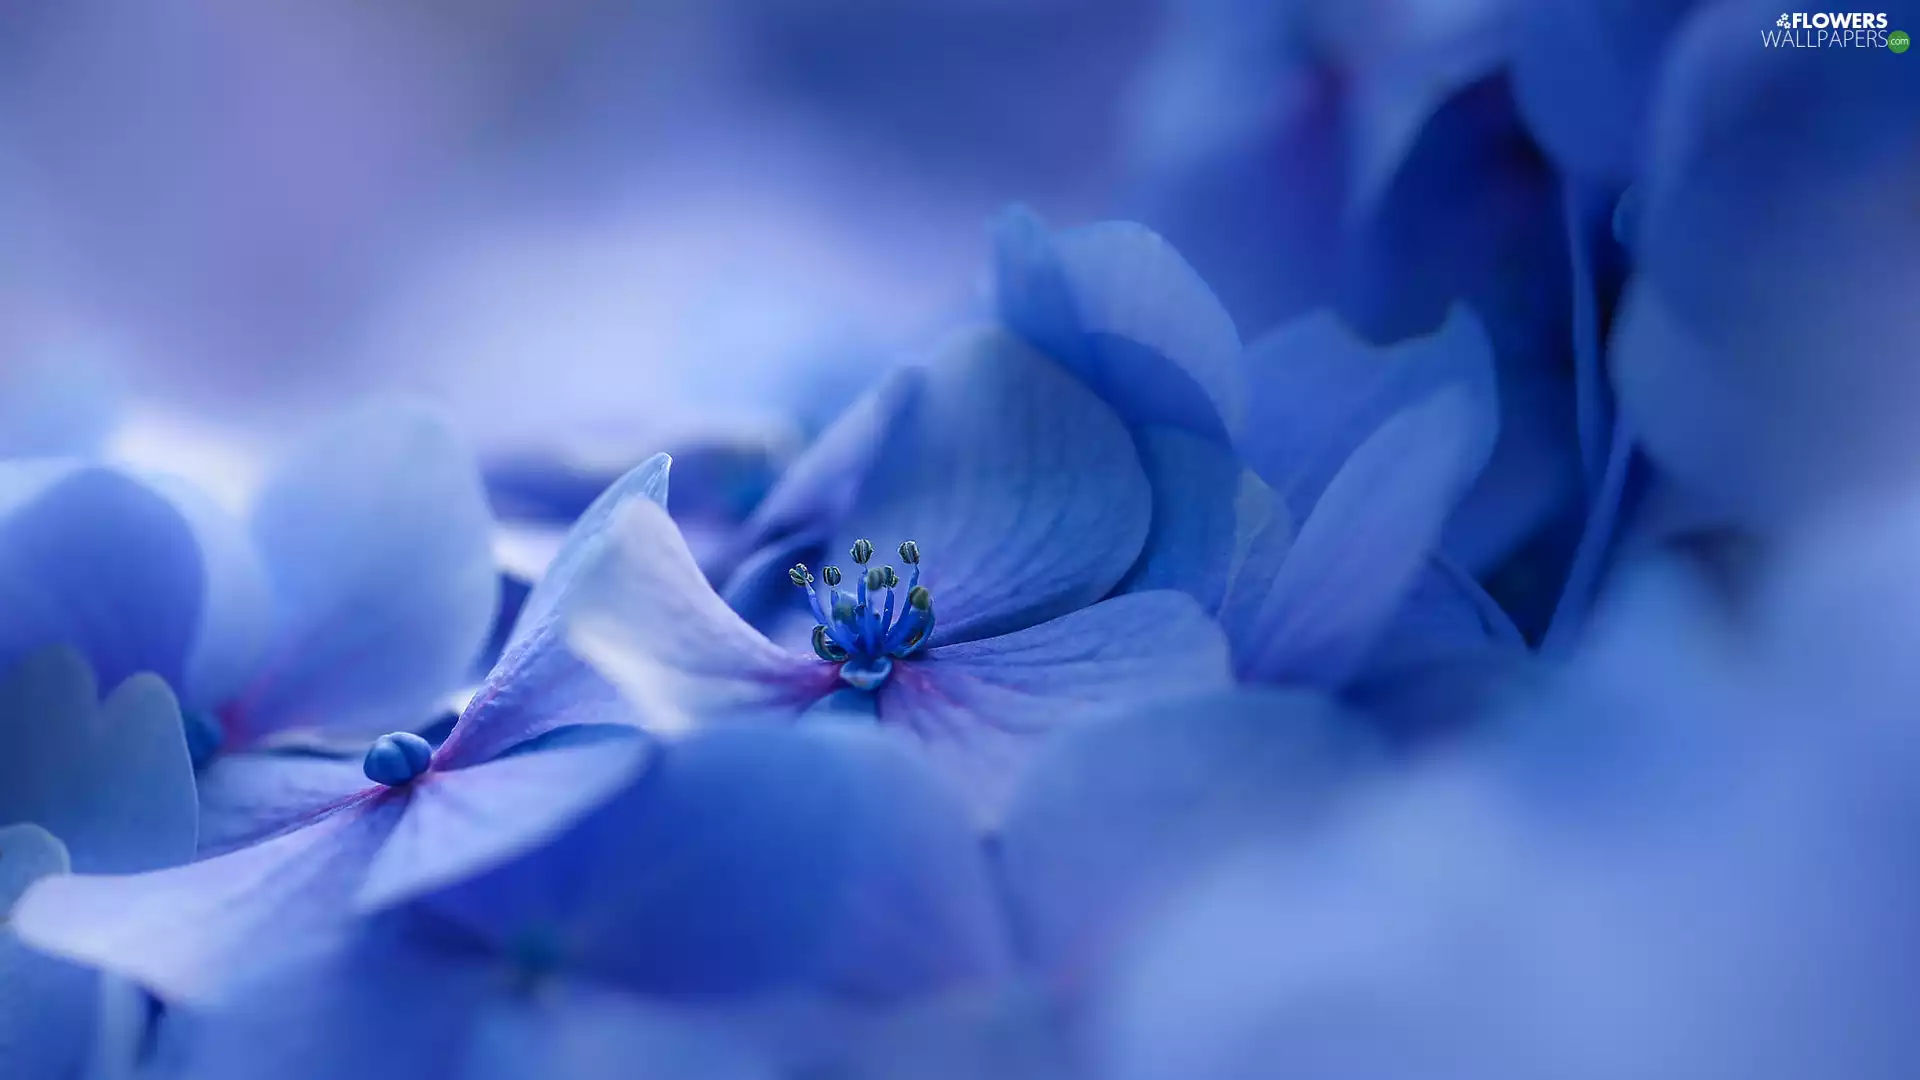 Blue, hydrangea, blurry background, Flowers - Flowers ...